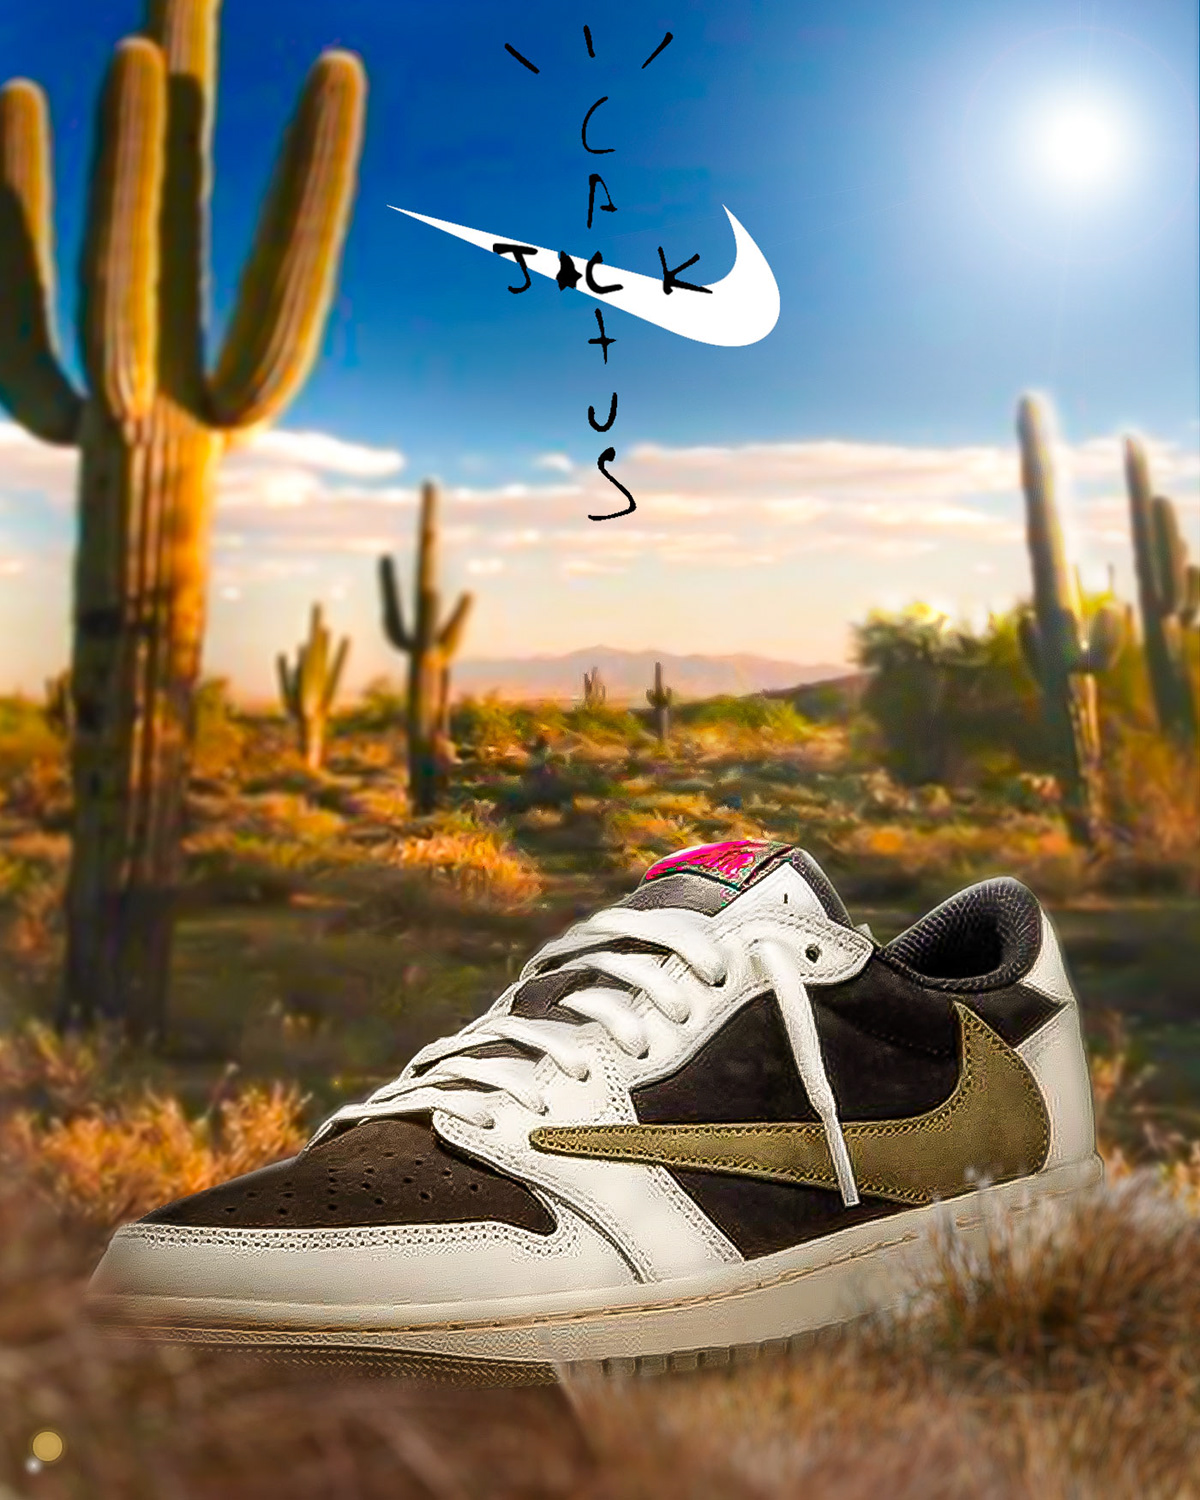 TRAVIS SCOTT poster manipulation jordan Nike sneakers